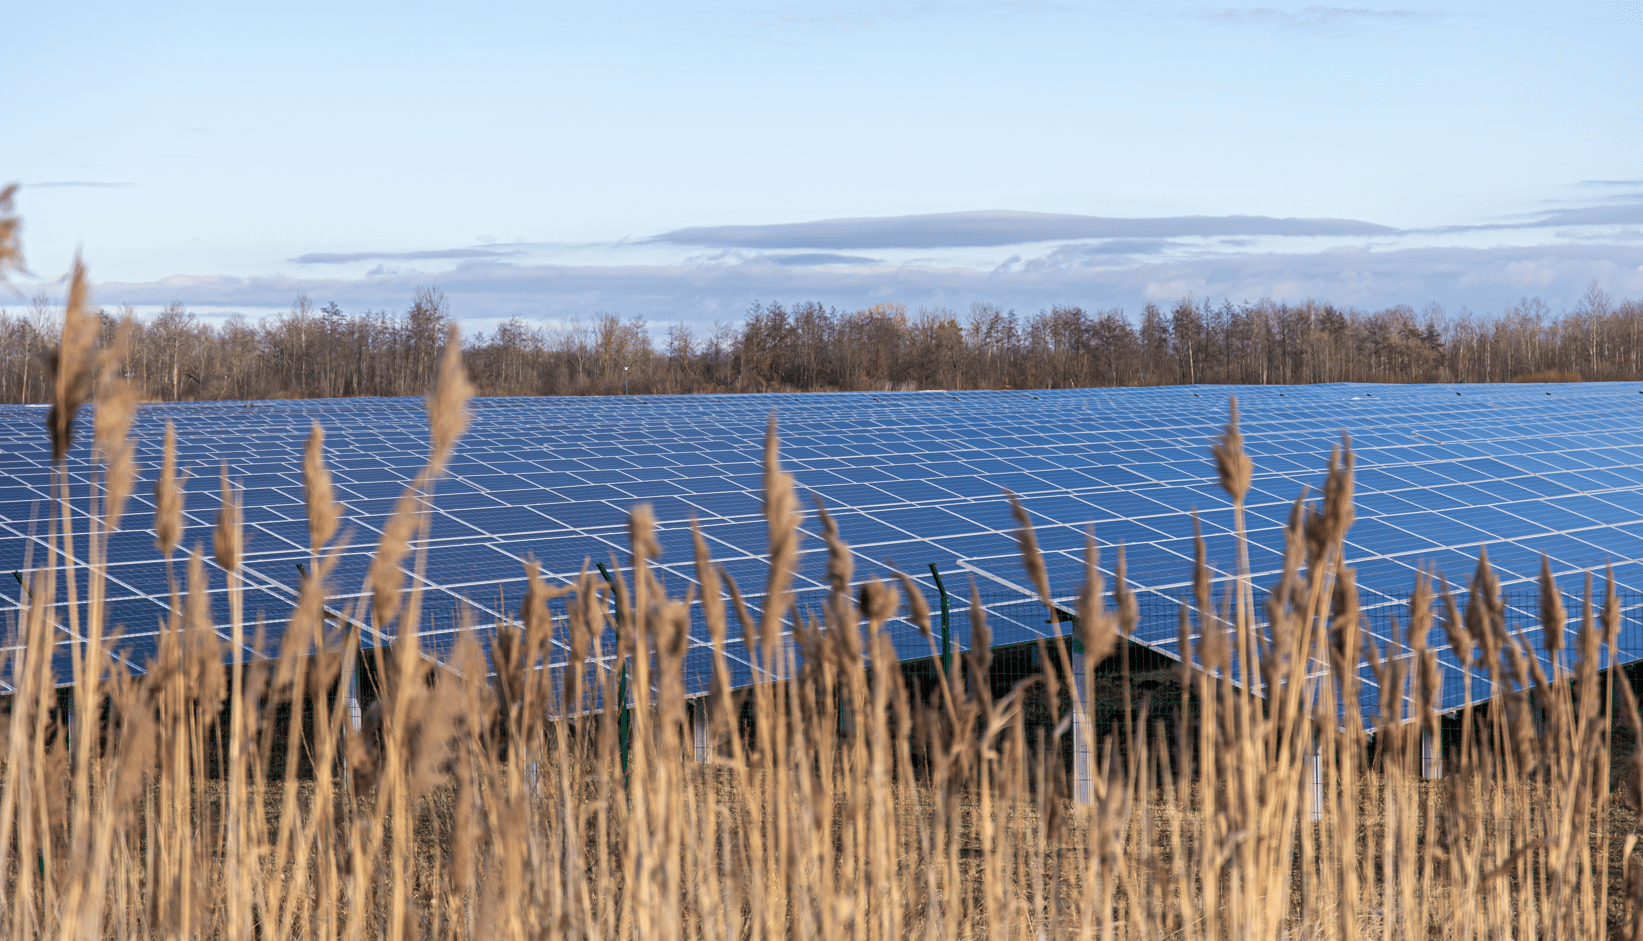 Australia's Solar Sector